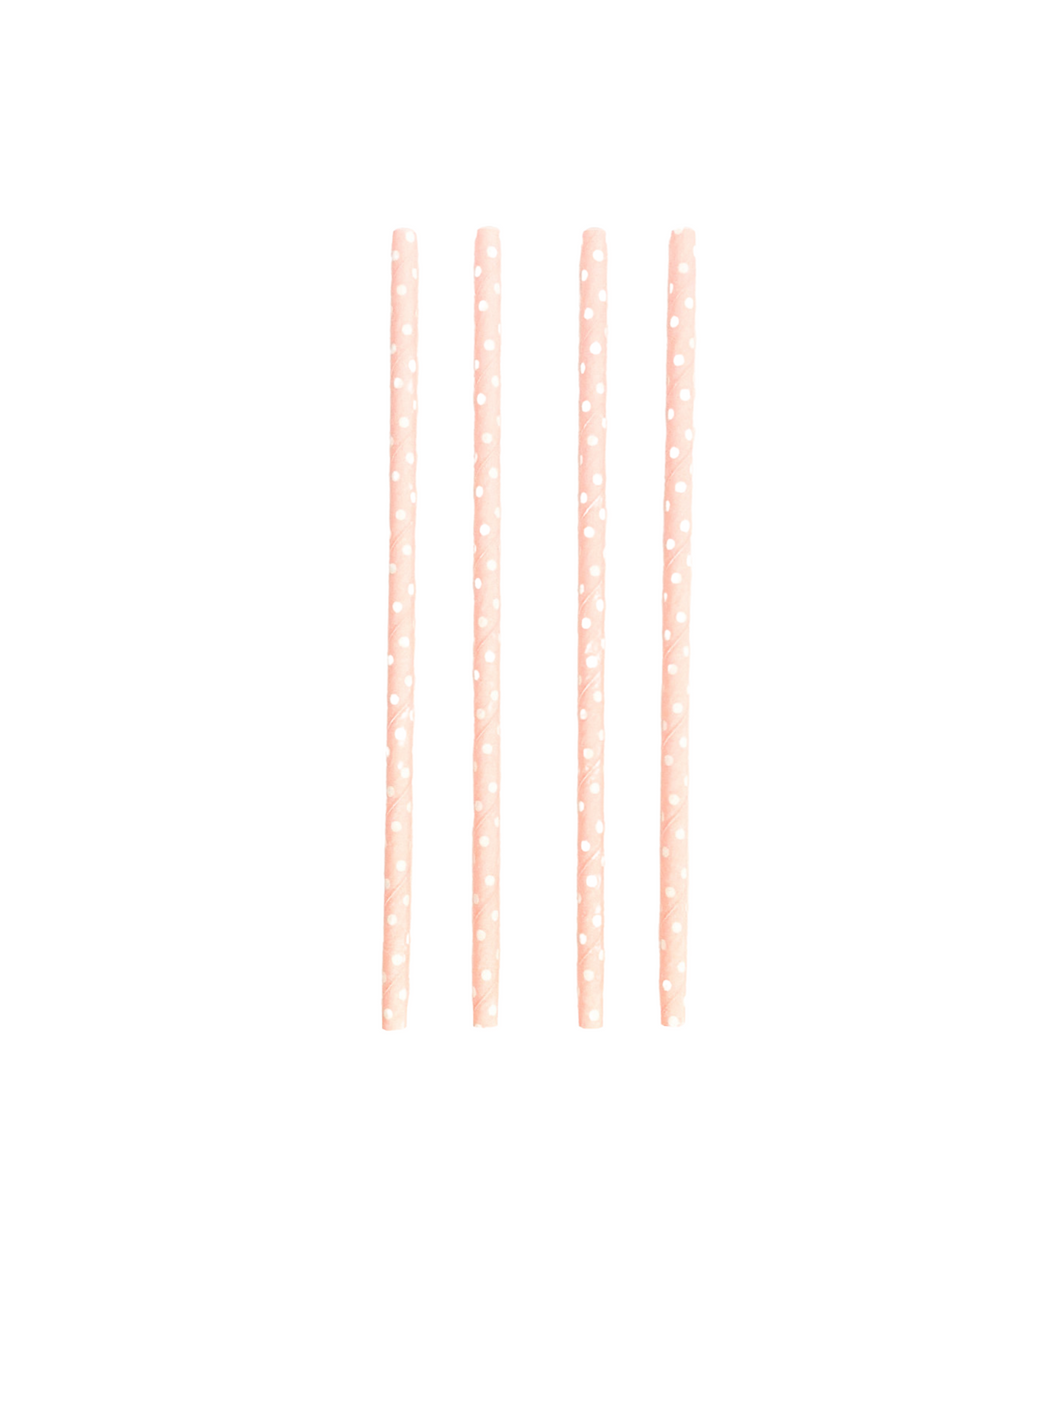 Pink Polka Dot Straws (Set of 10)